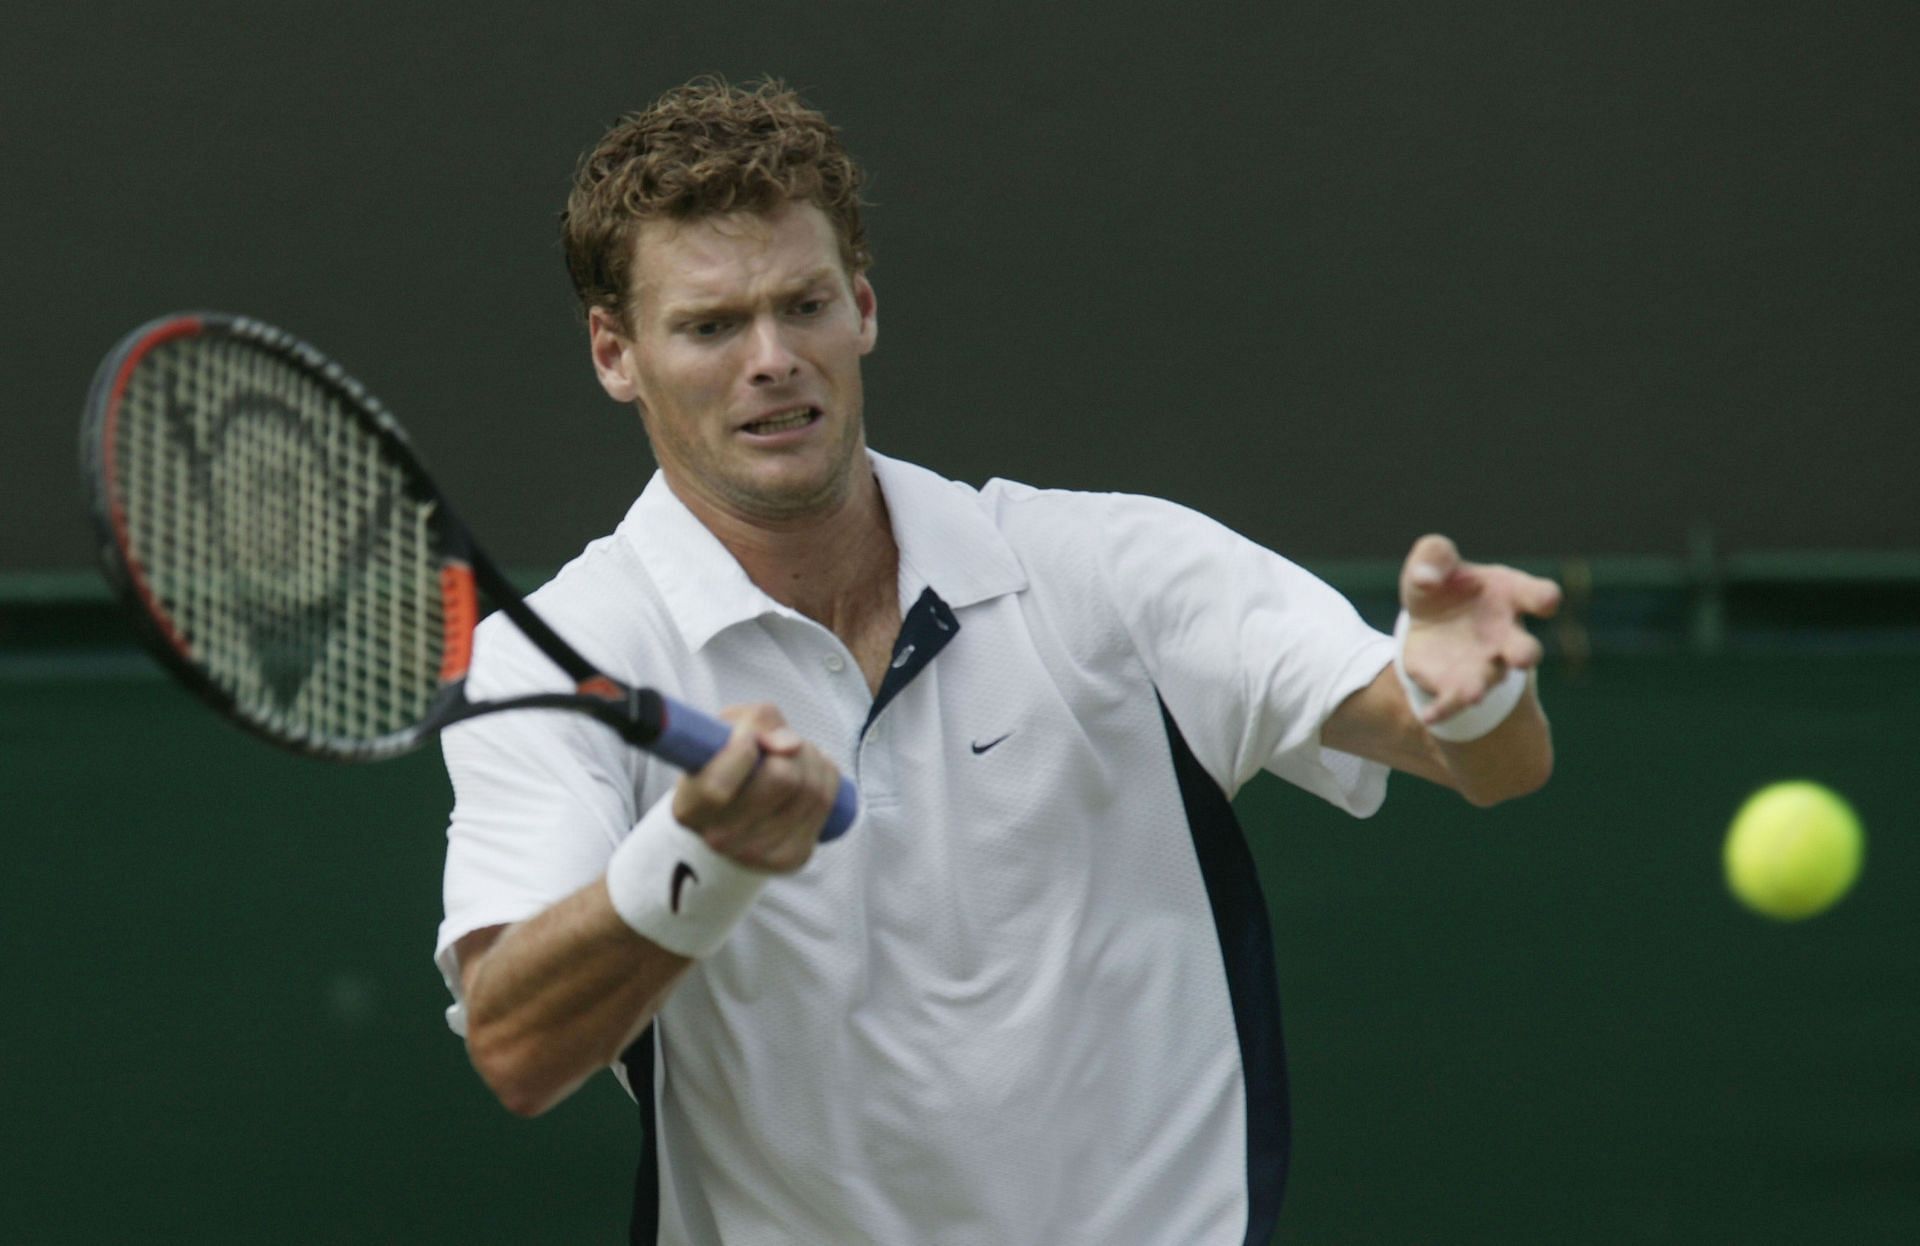 Sjeng Schalken of Netherlands in action at the 2002 Wimbledon Championships.